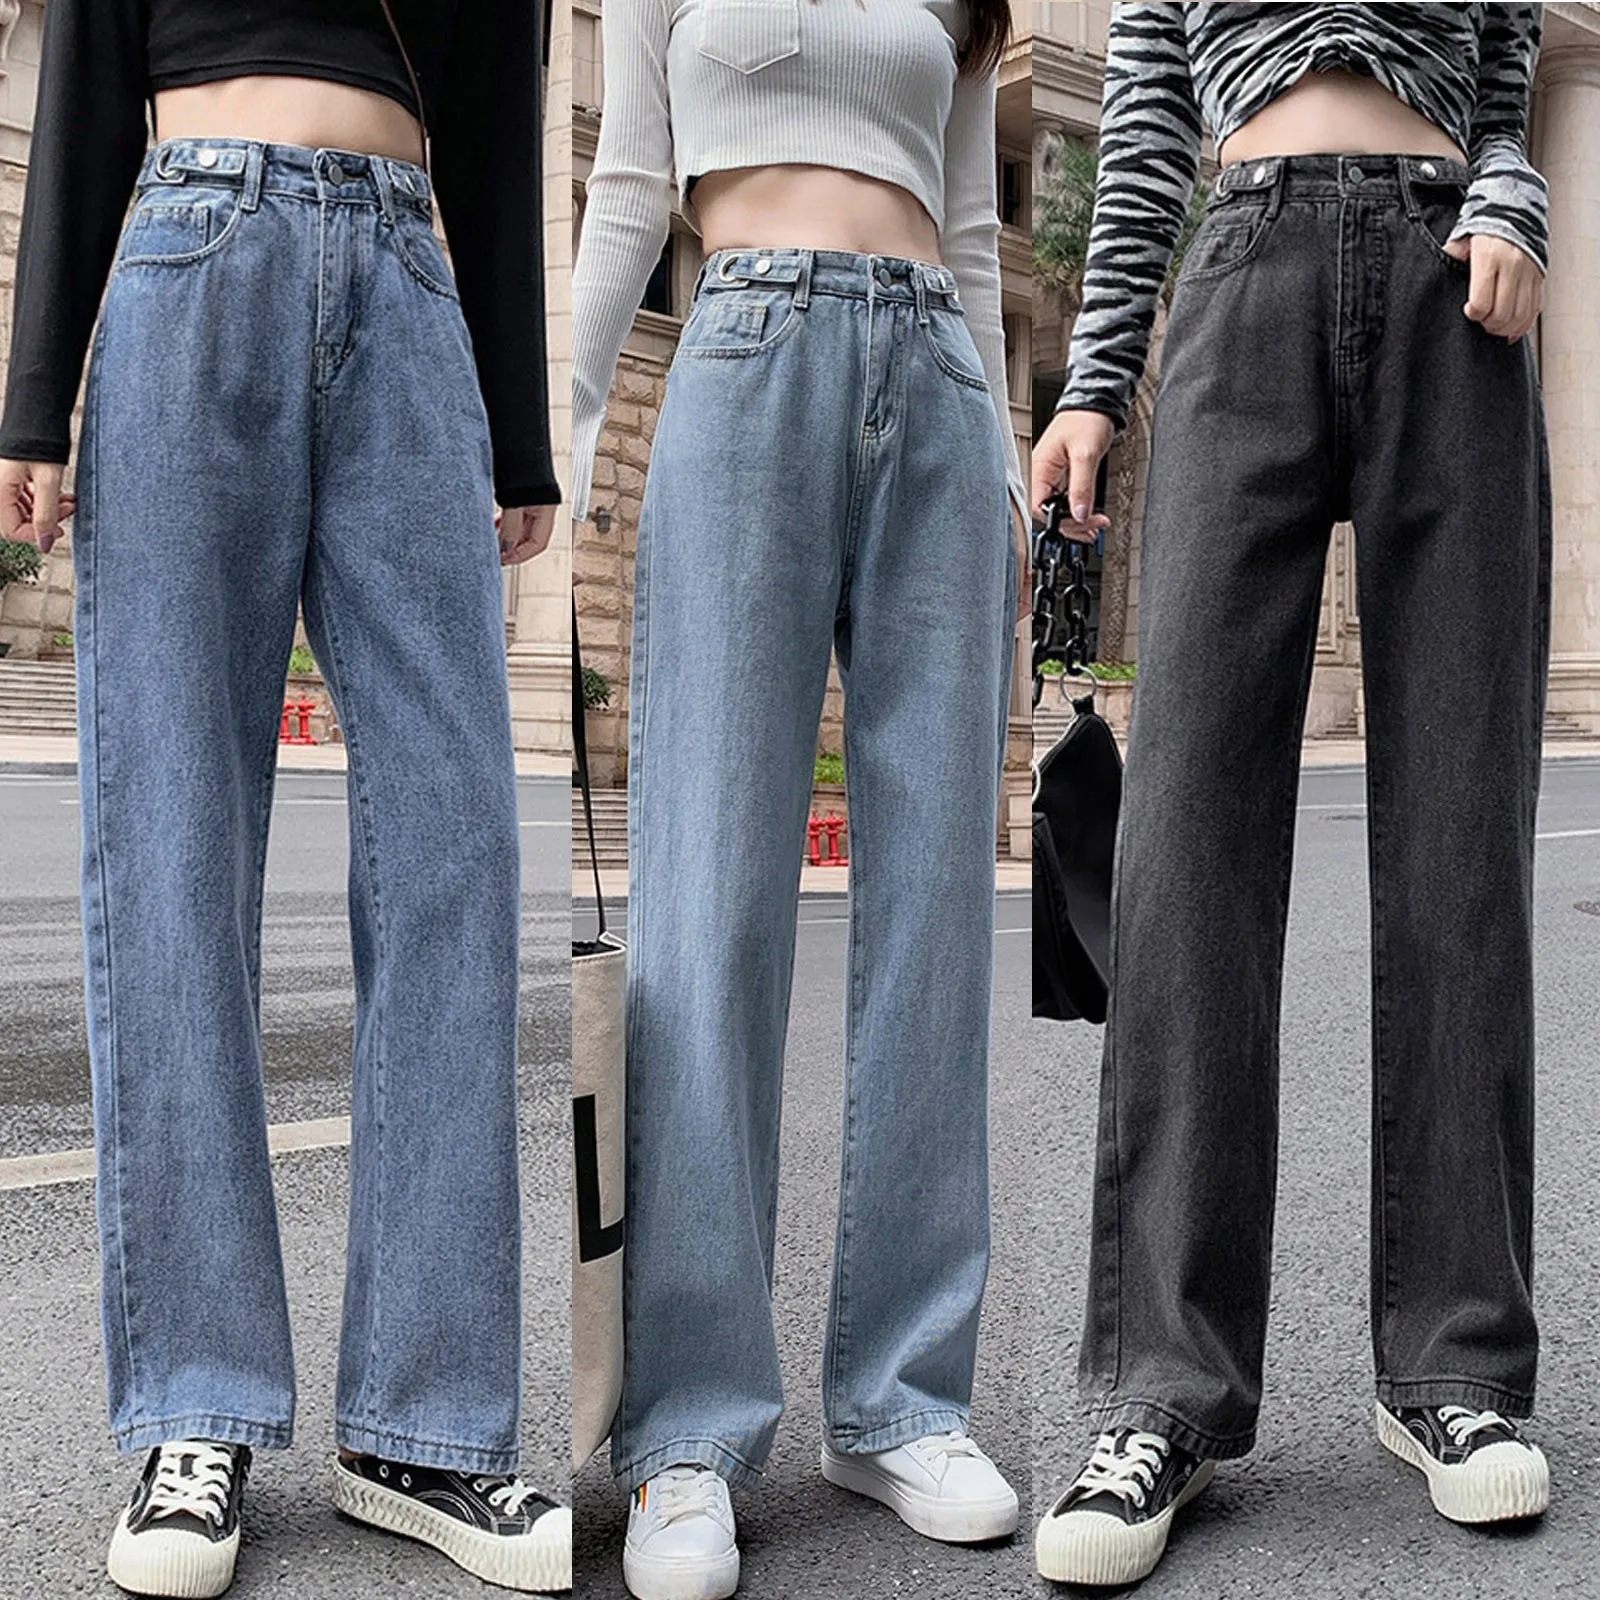 Women's Jeans Casual Hight Waist Distressed Straight Denim Jeans Vintage Trouser Plus Size Denim Pants Fashion Streetwear Pants